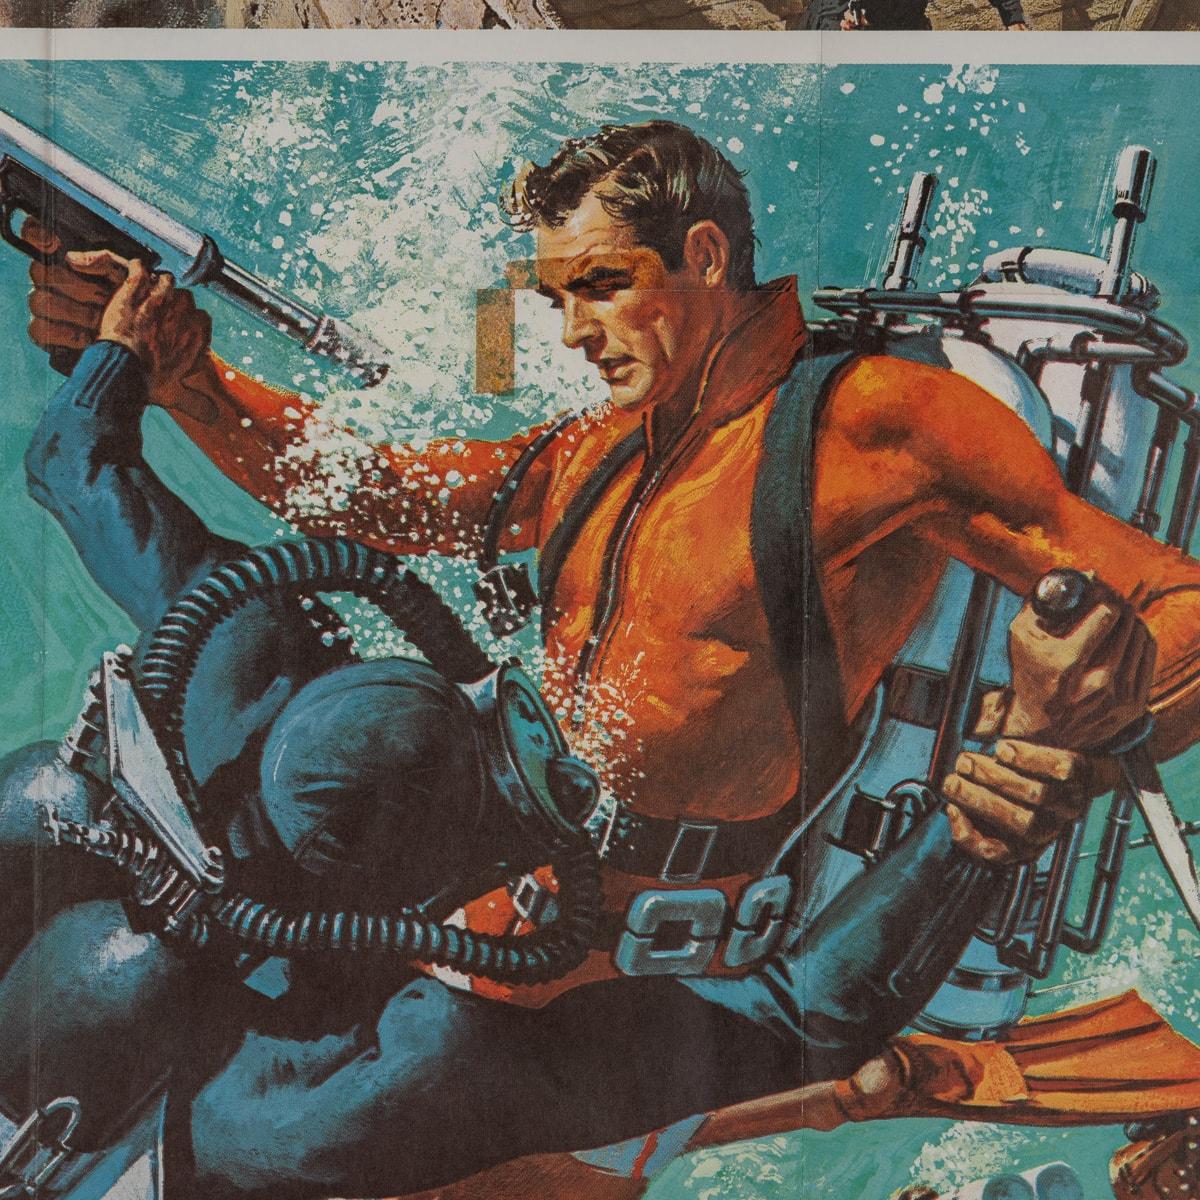 Wood Original U.S James Bond 007 'Thunderball' Poster c.1965 For Sale